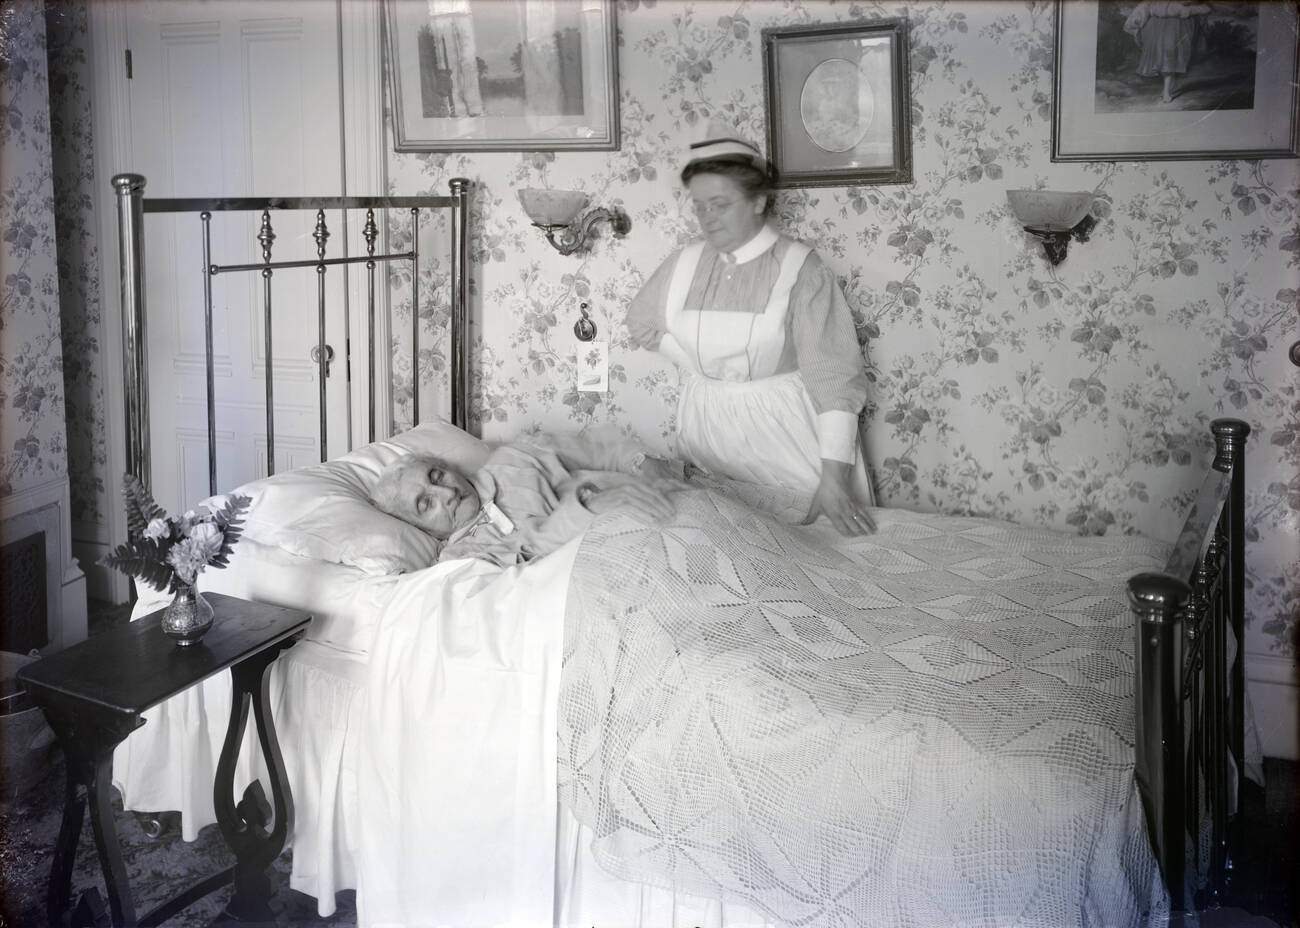 A sick elderly woman with a nurse.